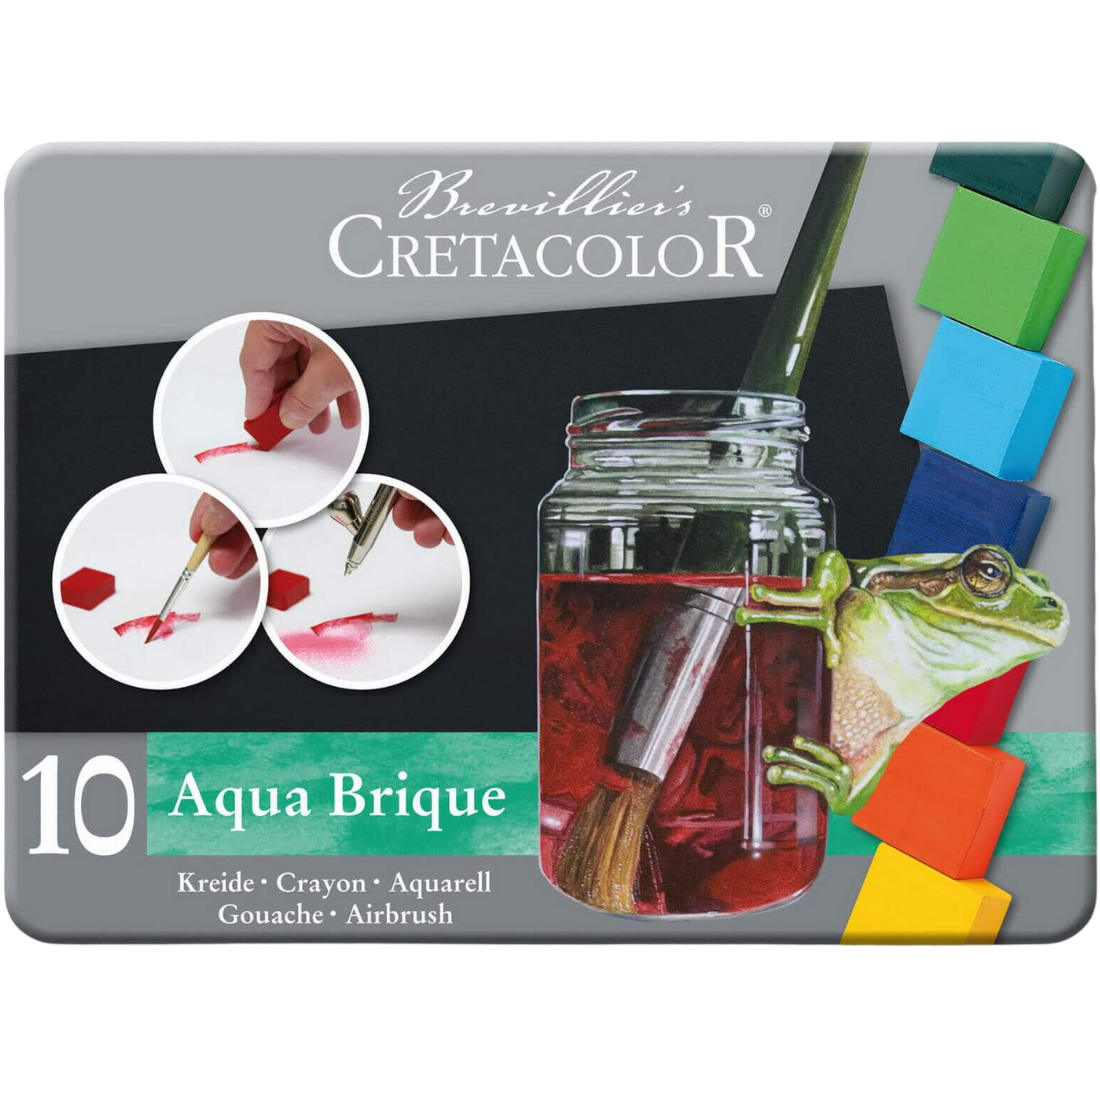 Conjunto aguarela Aqua Brique com 10 unidades da Cretacolor.